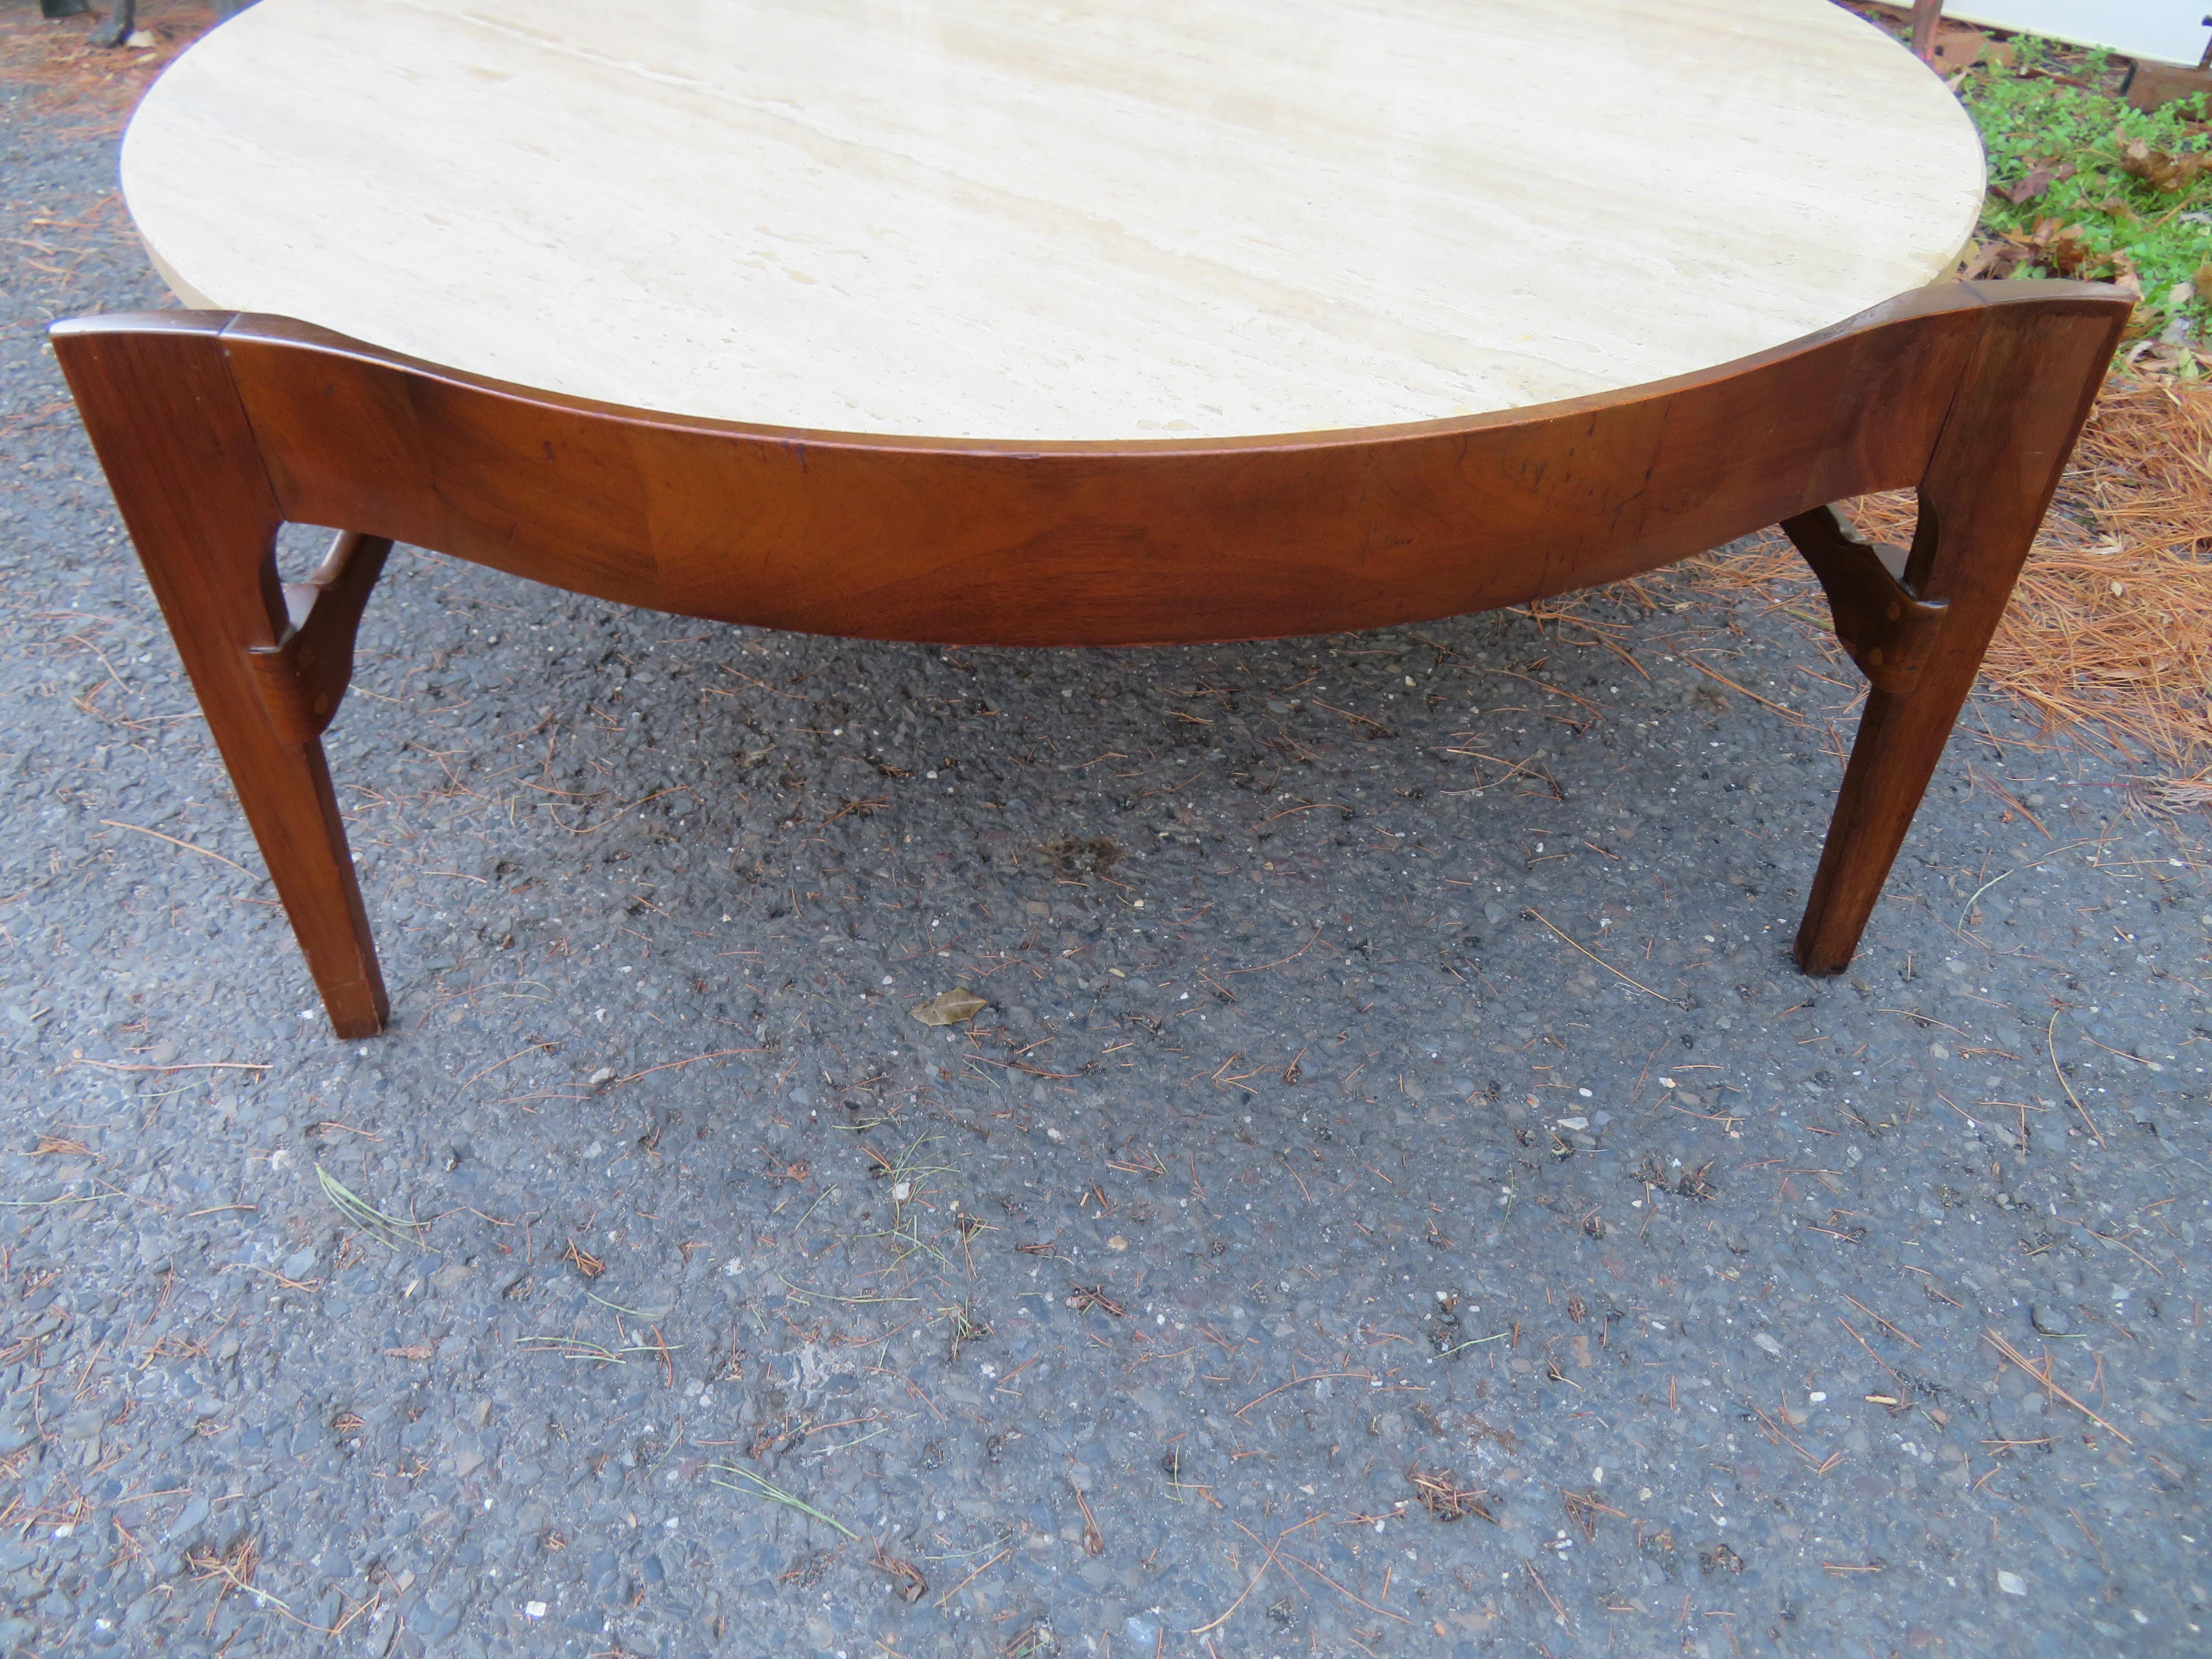 Stunning Bertha Schaefer Travertine Round Coffee Table Mid-Century Modern 1